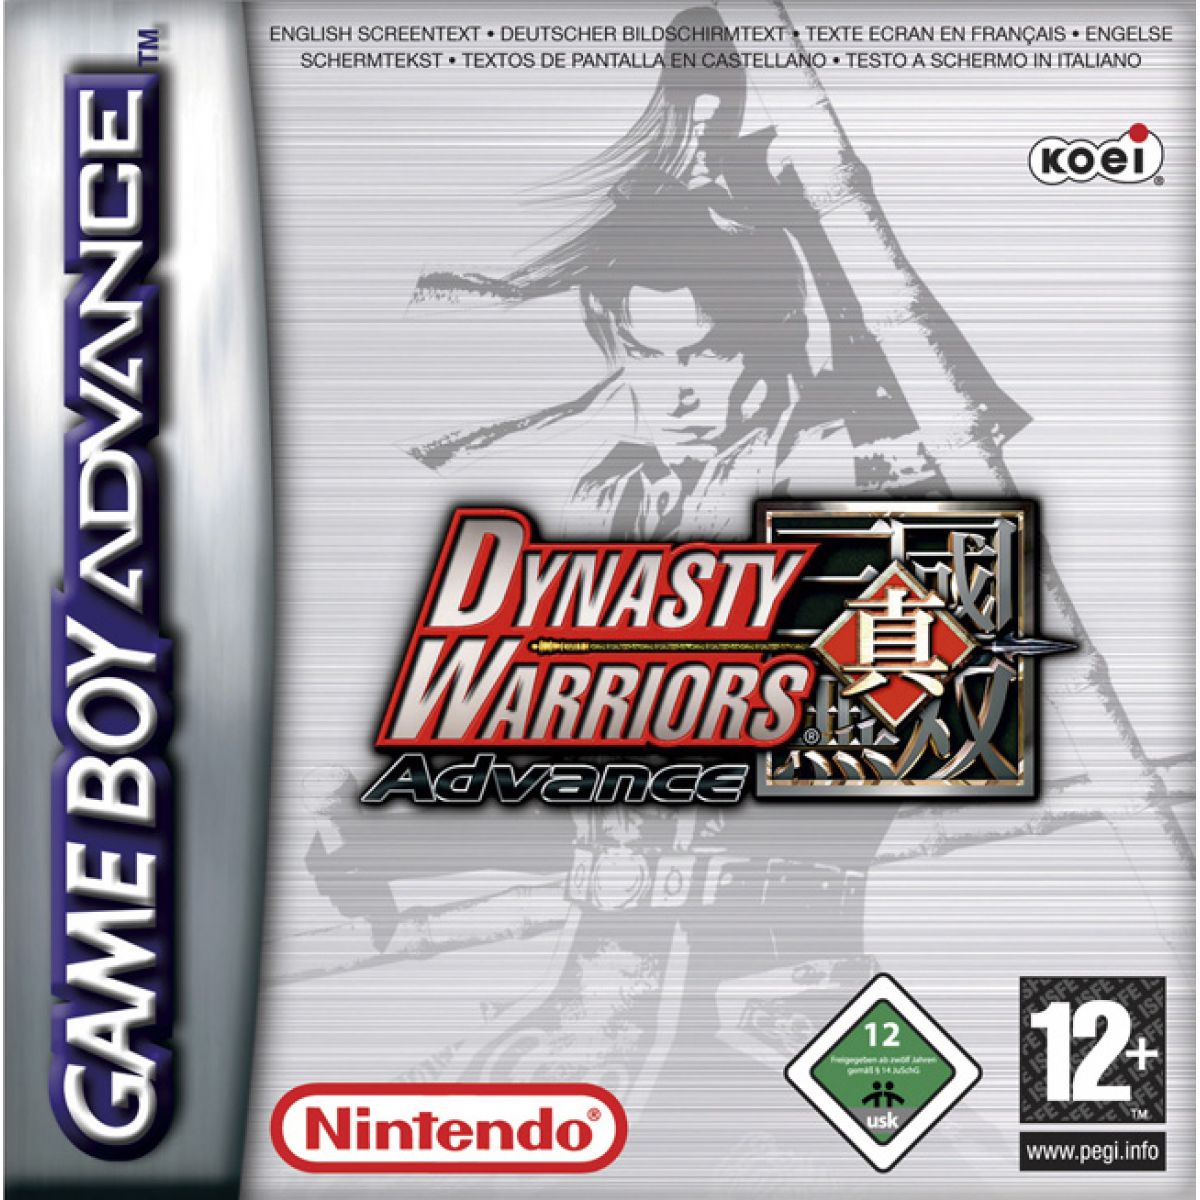 Nintendo Dynasty Warriors